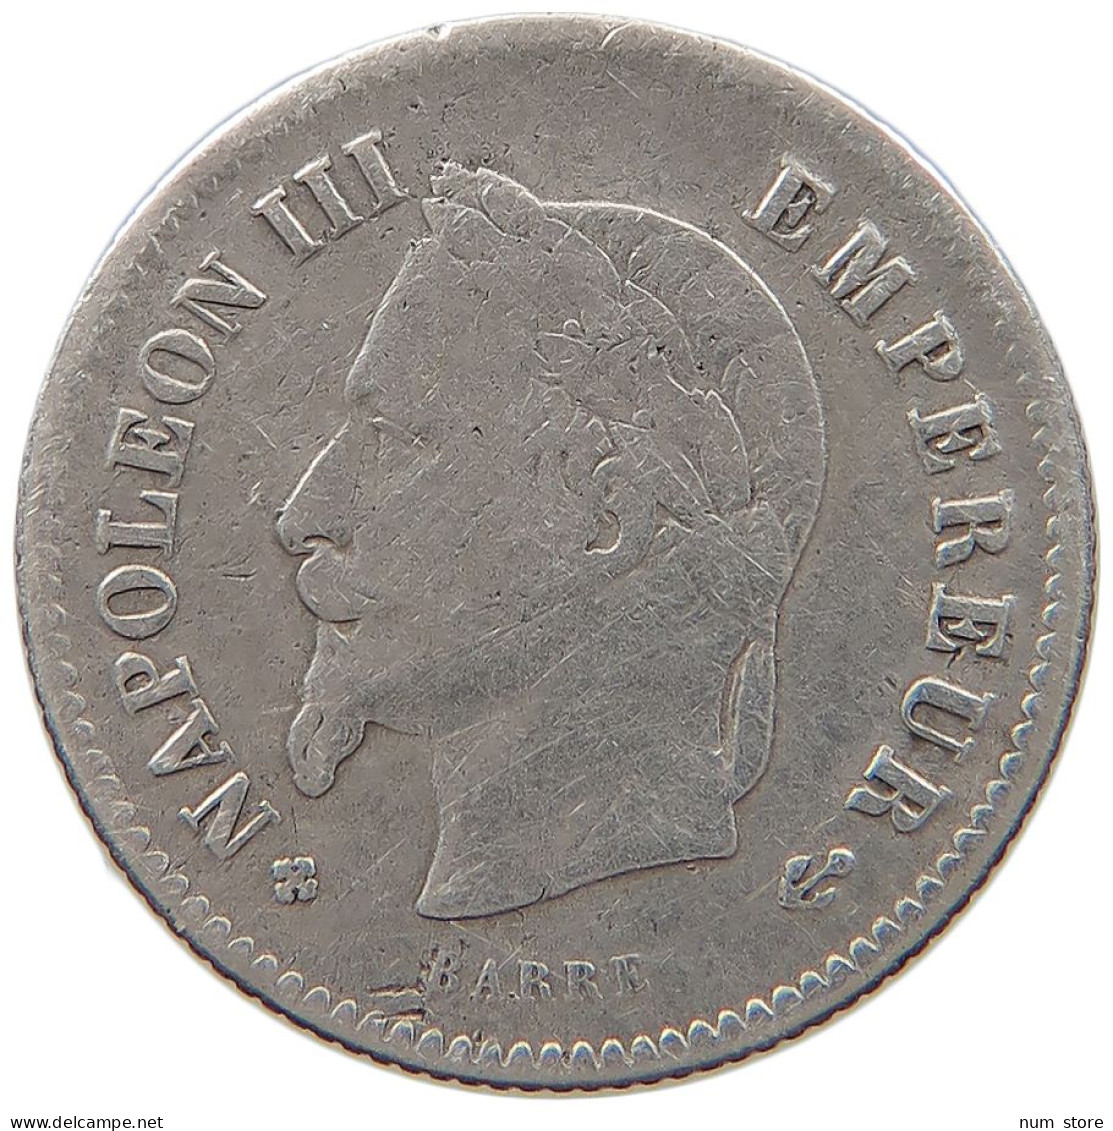 FRANCE 10 CENTIMES 1867 BB NAPOLEON III. (1852-1870) #MA 068325 - 10 Centimes